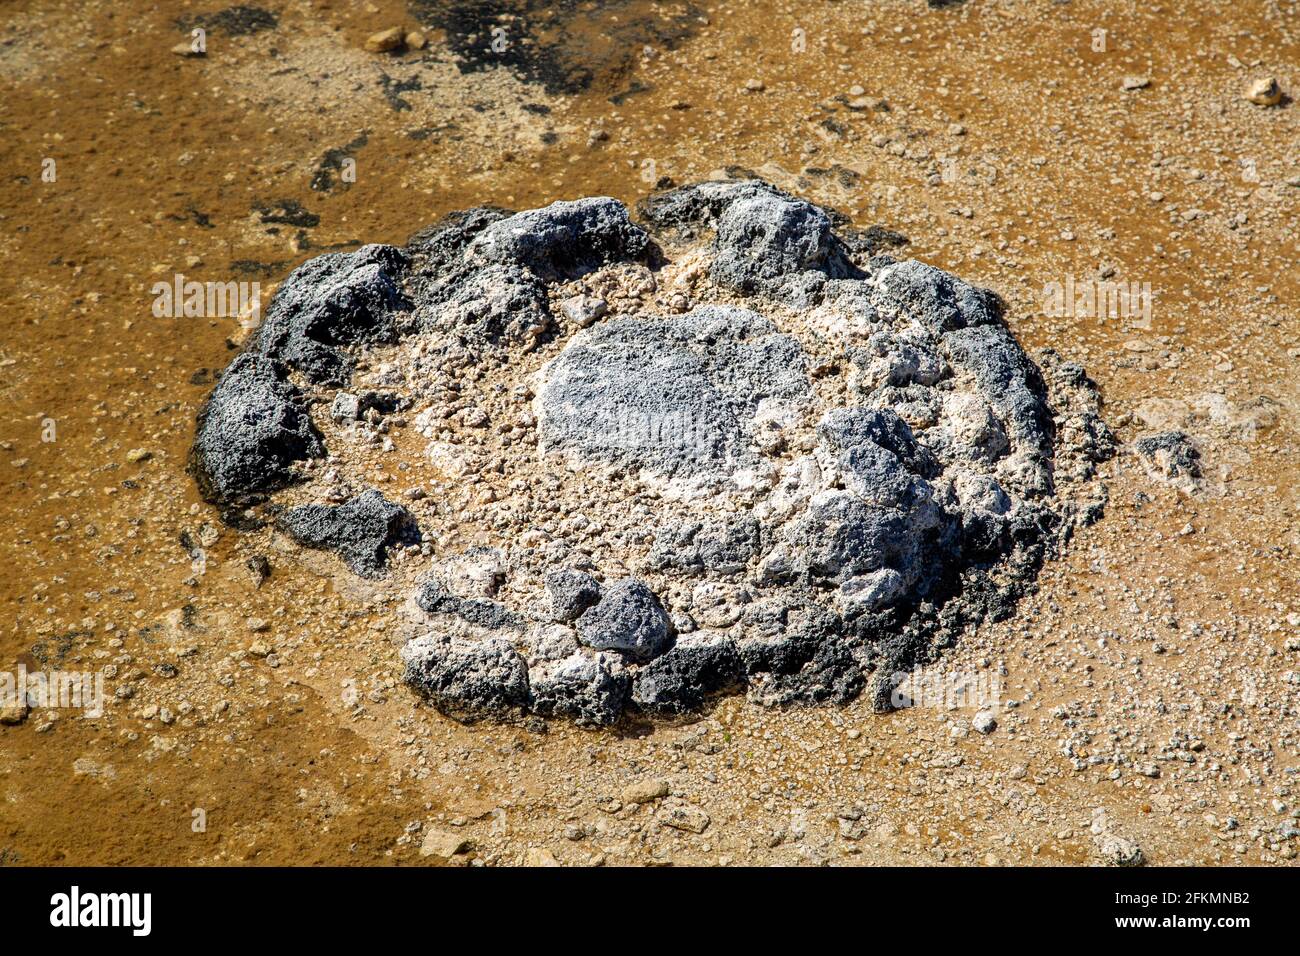 Stromatolithe am Lake Thetis, Cervantes, Westaustralien. Stromatolithen sind die ältesten lebenden Lebensformen auf unserem Planeten Stockfoto